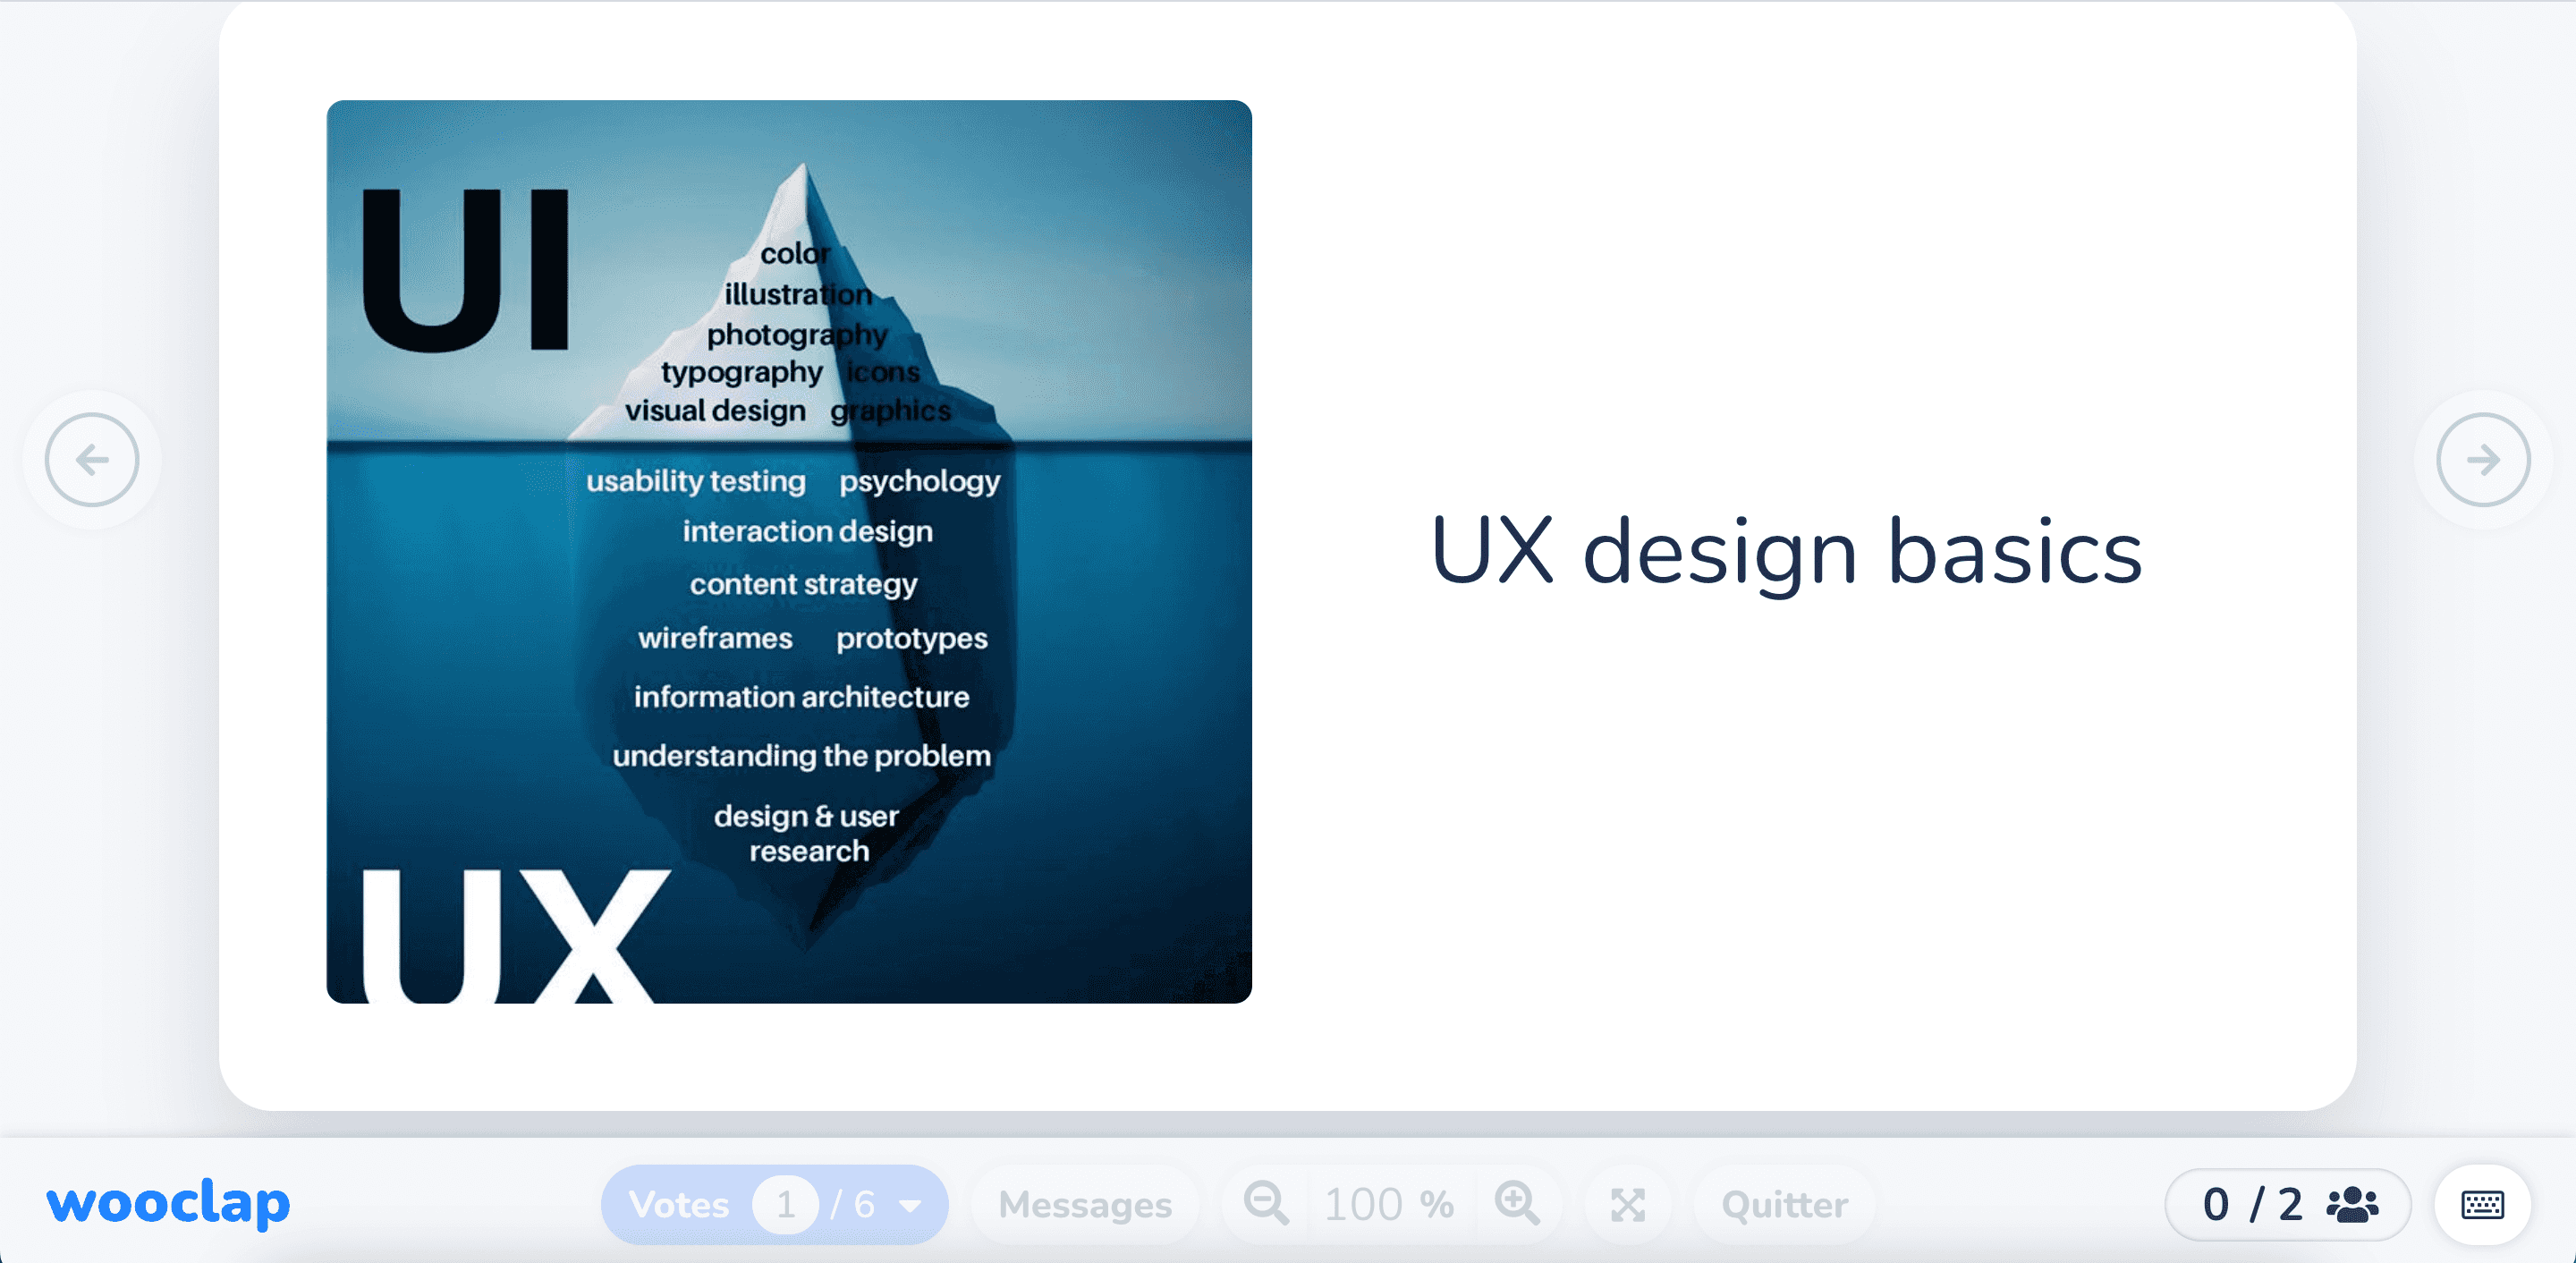 UX design basics